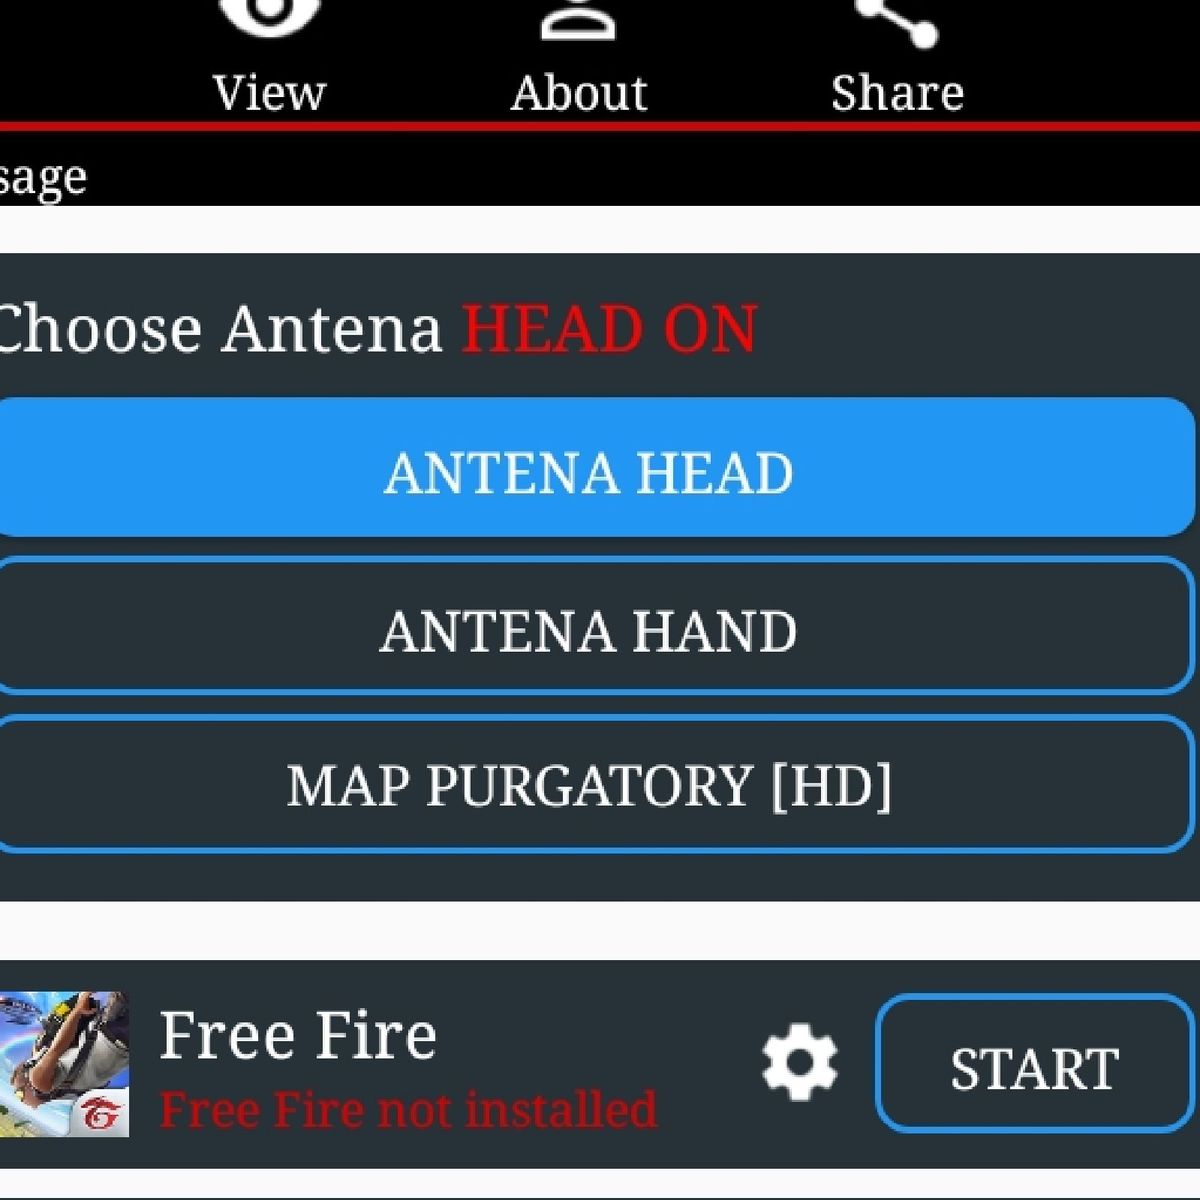 Hack Antena Free Fire 100% Anti Ban 7.0